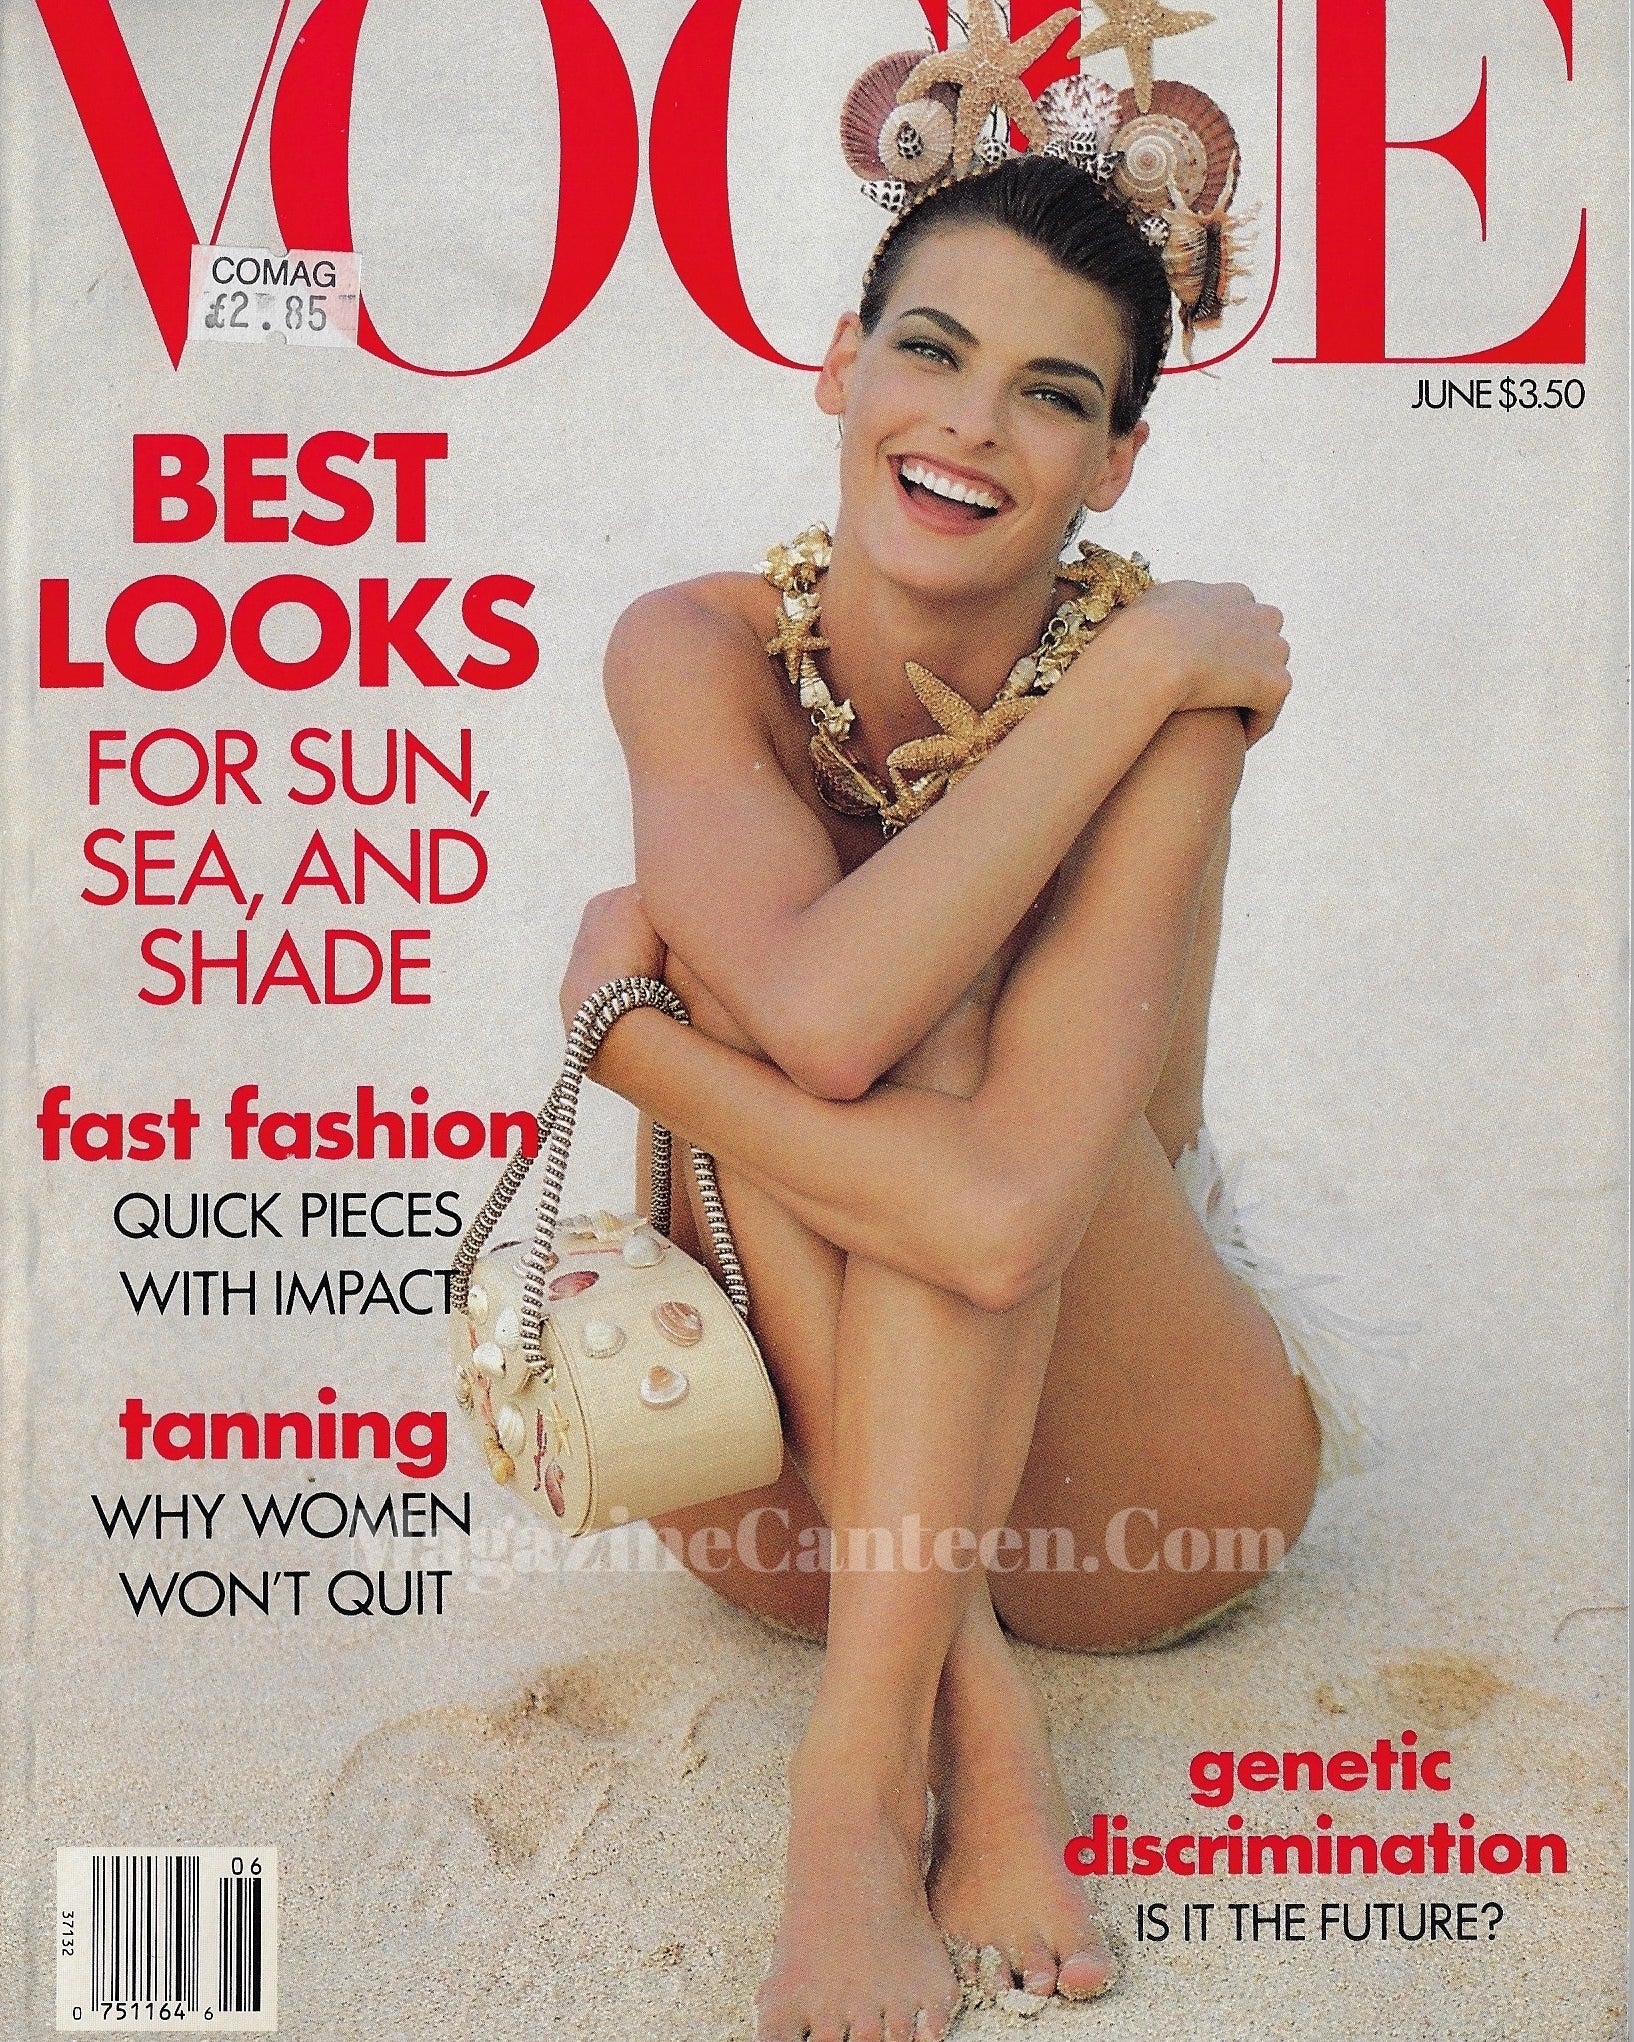 Vogue USA Magazine June 1990 - Linda Evangelista